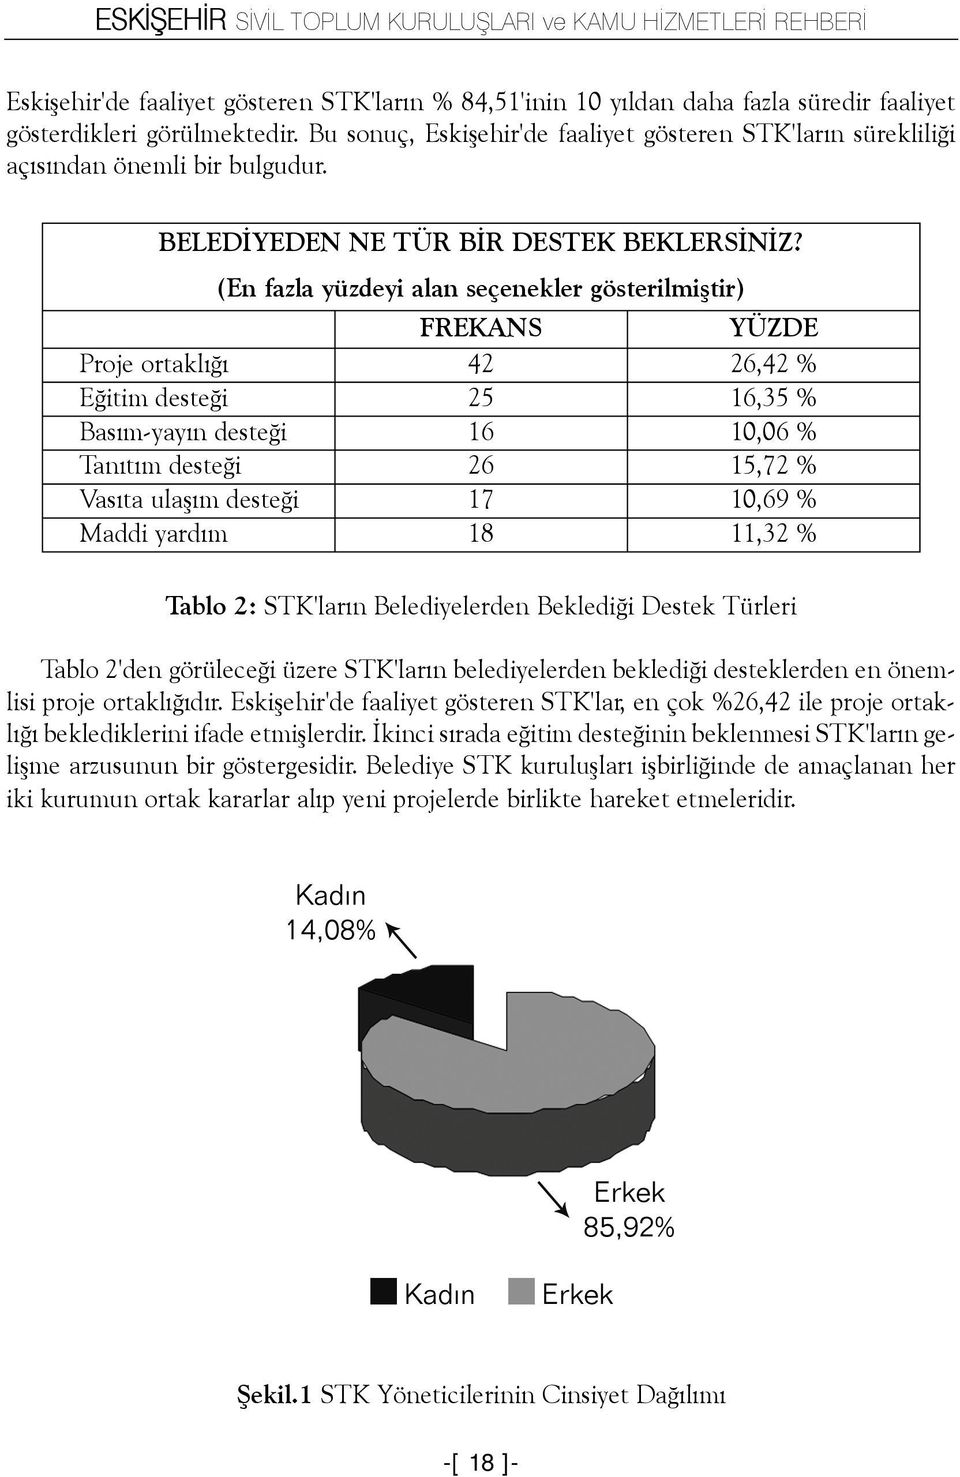 (En fazla yüzdeyi alan seçenekler gösterilmiþtir) FREKANS YÜZDE Proje ortaklýðý 42 26,42 % Eðitim desteði 25 16,35 % Basým-yayýn desteði 16 10,06 % Tanýtým desteði 26 15,72 % Vasýta ulaþým desteði 17